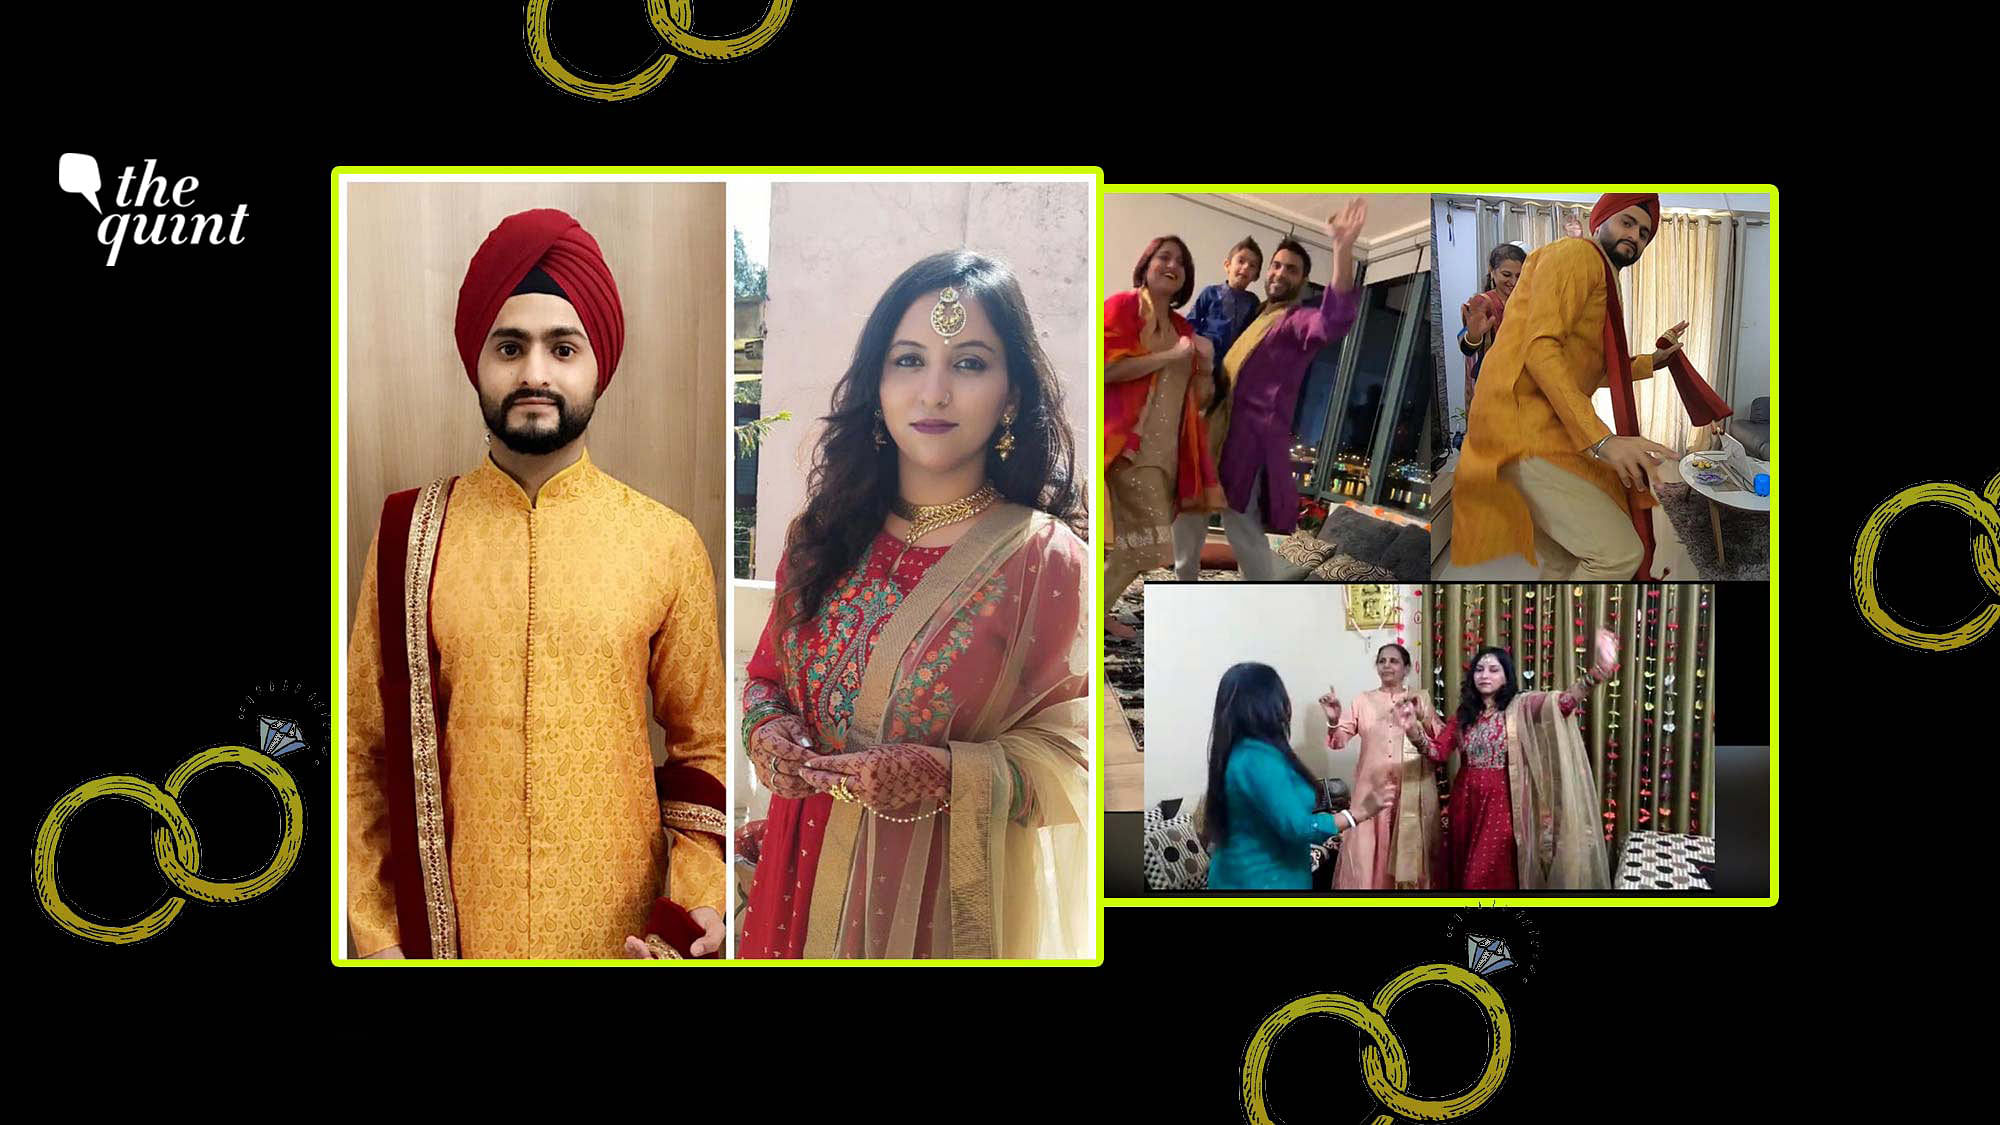 Preet Singh and Neet Kaur got married over a zoom call.